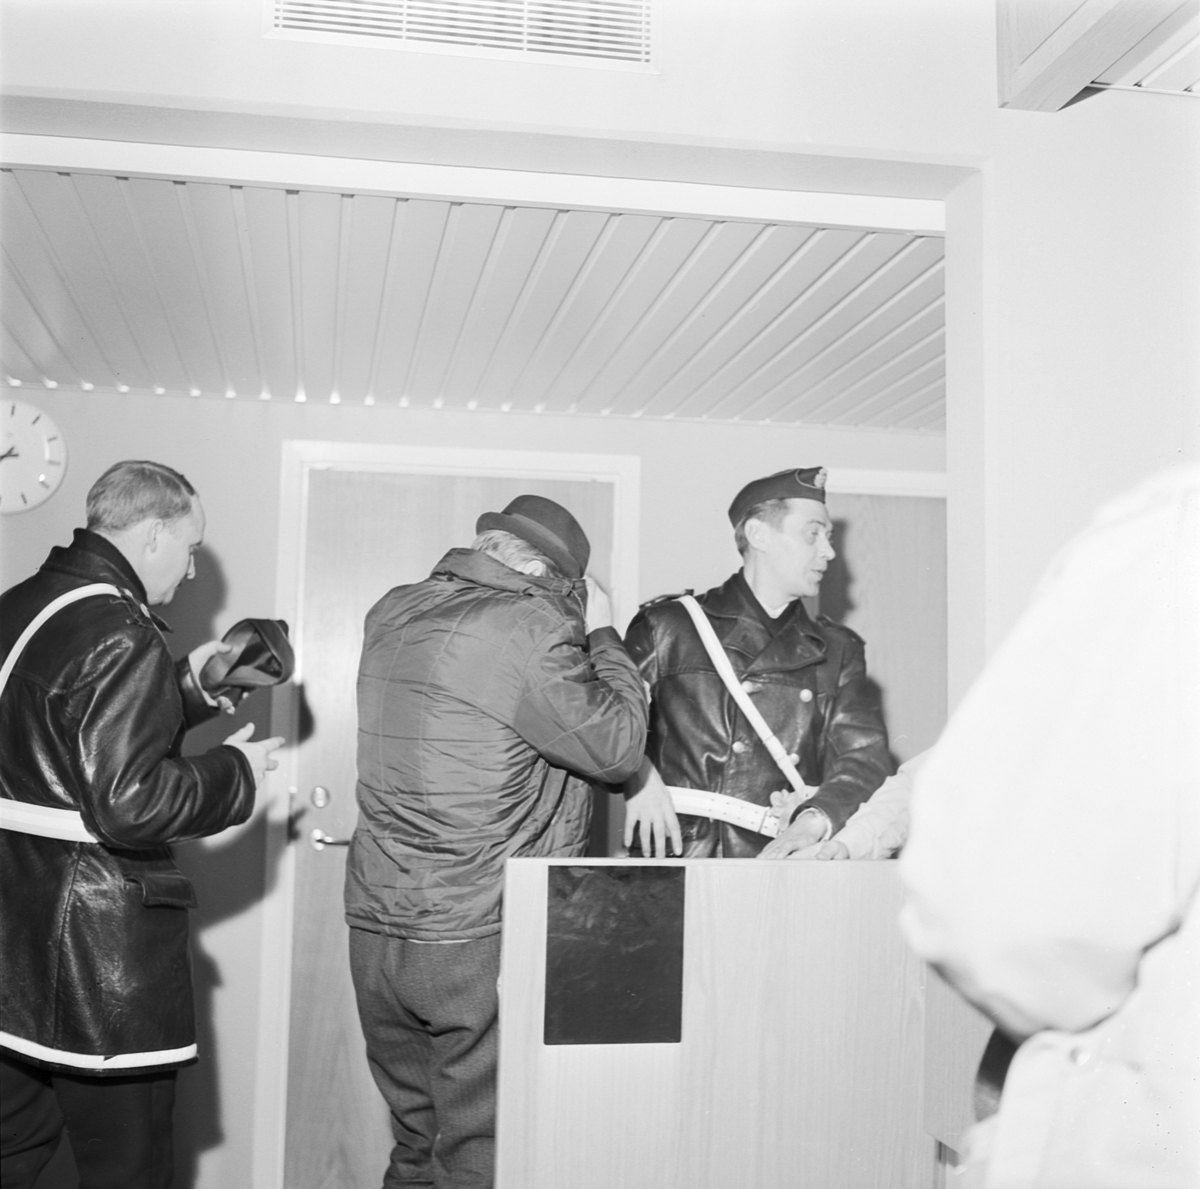 "Sölving", polisingripande, Tierp, Uppland 1969